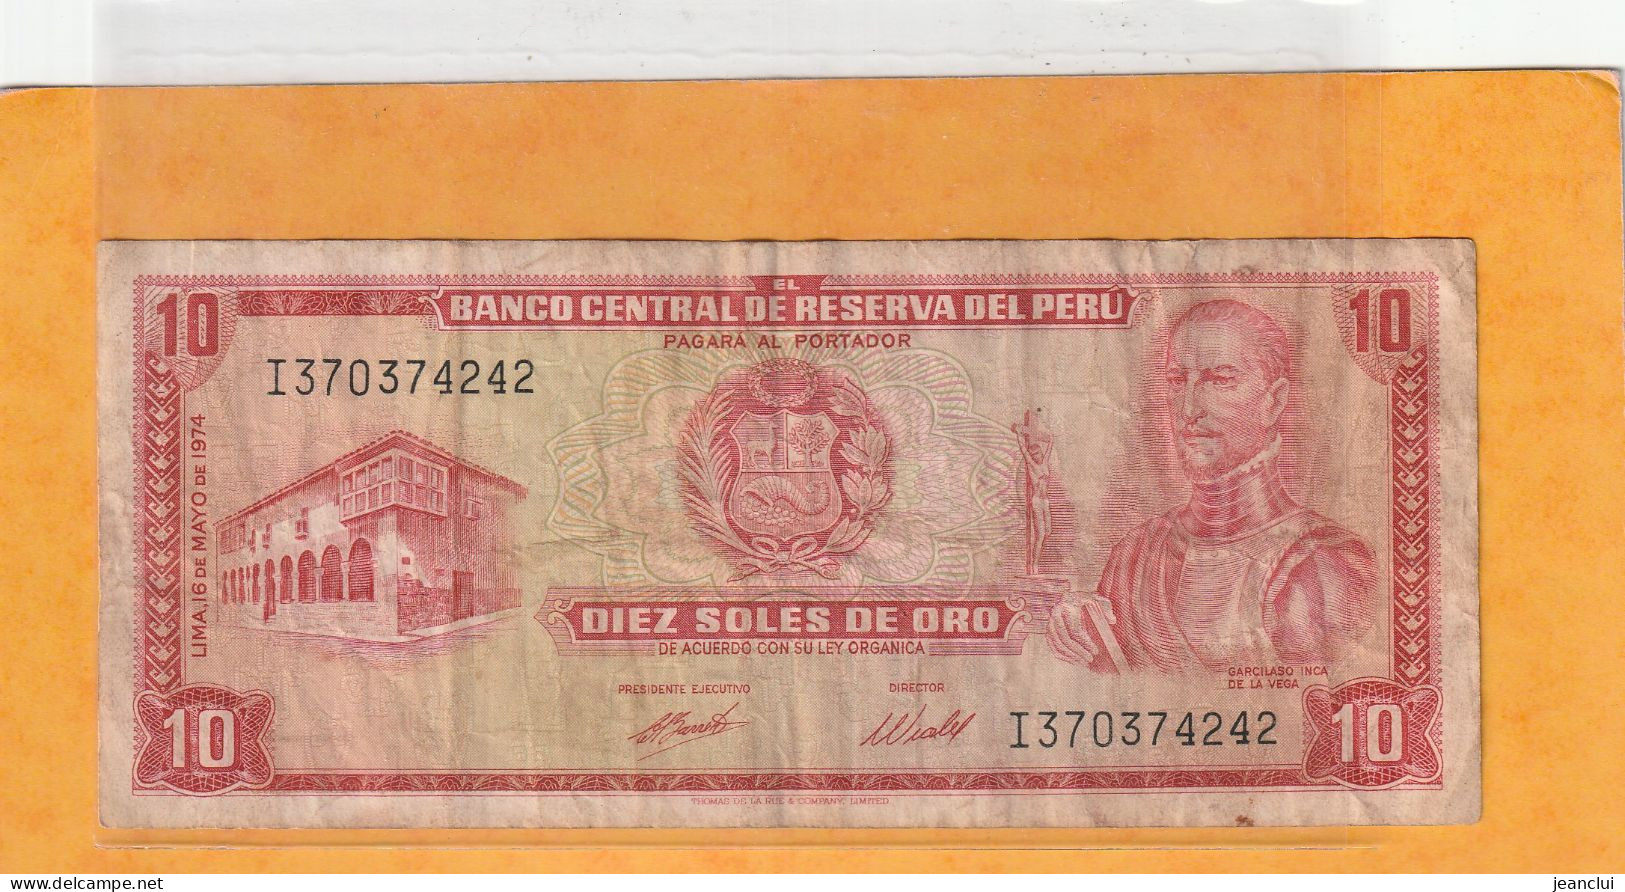 BANCO CENTRAL DE RESERVA DEL PERU .  10 SOLES DE ORO  .  16 DE MAYO DE 1974  . N°  I 3703742 .  2 SCANNES  .  ETAT USITE - Pérou